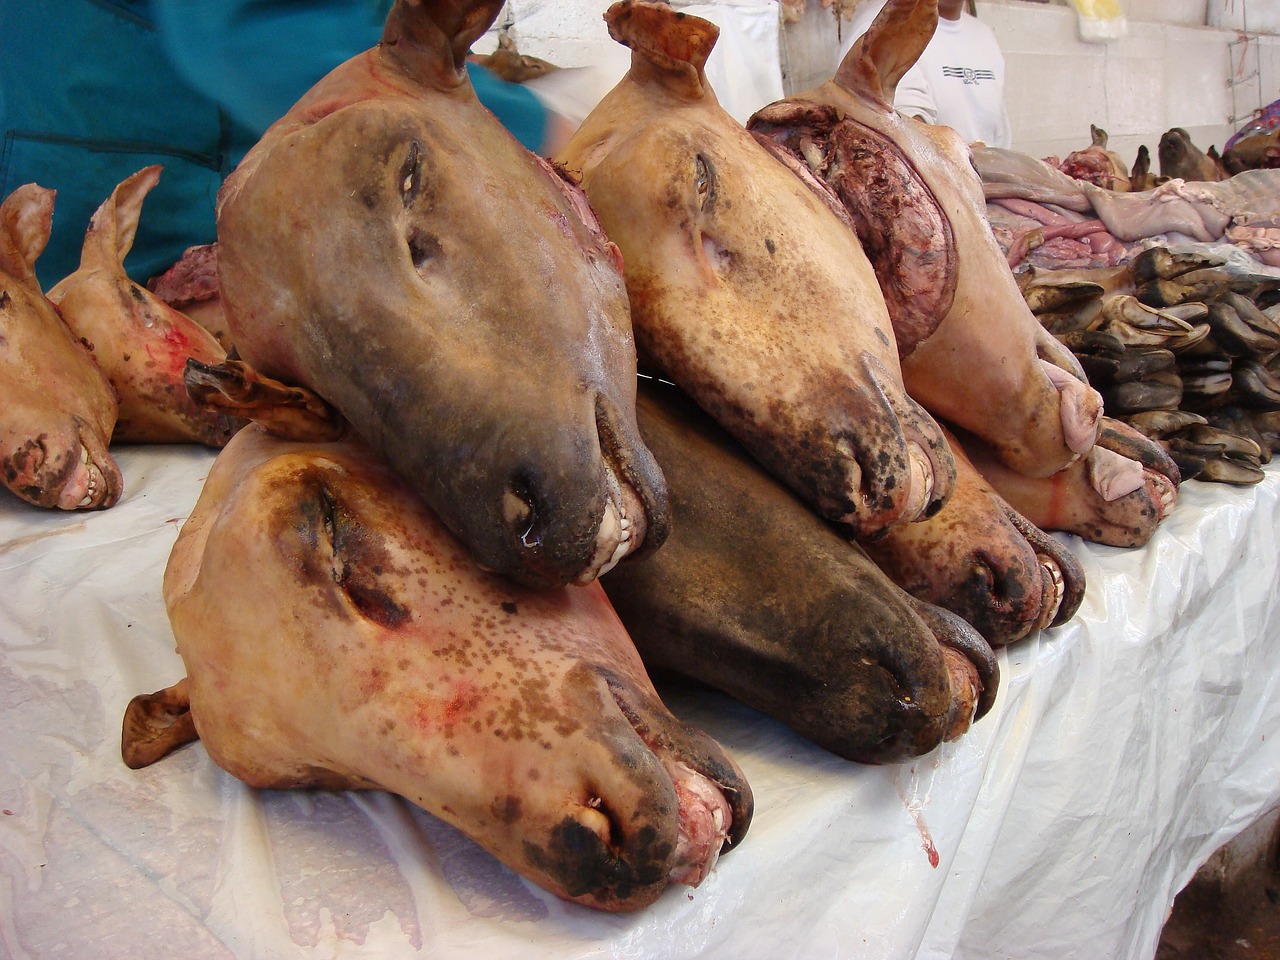 Millions of farm animals slaughtered in . during coronavirus | FairPlanet